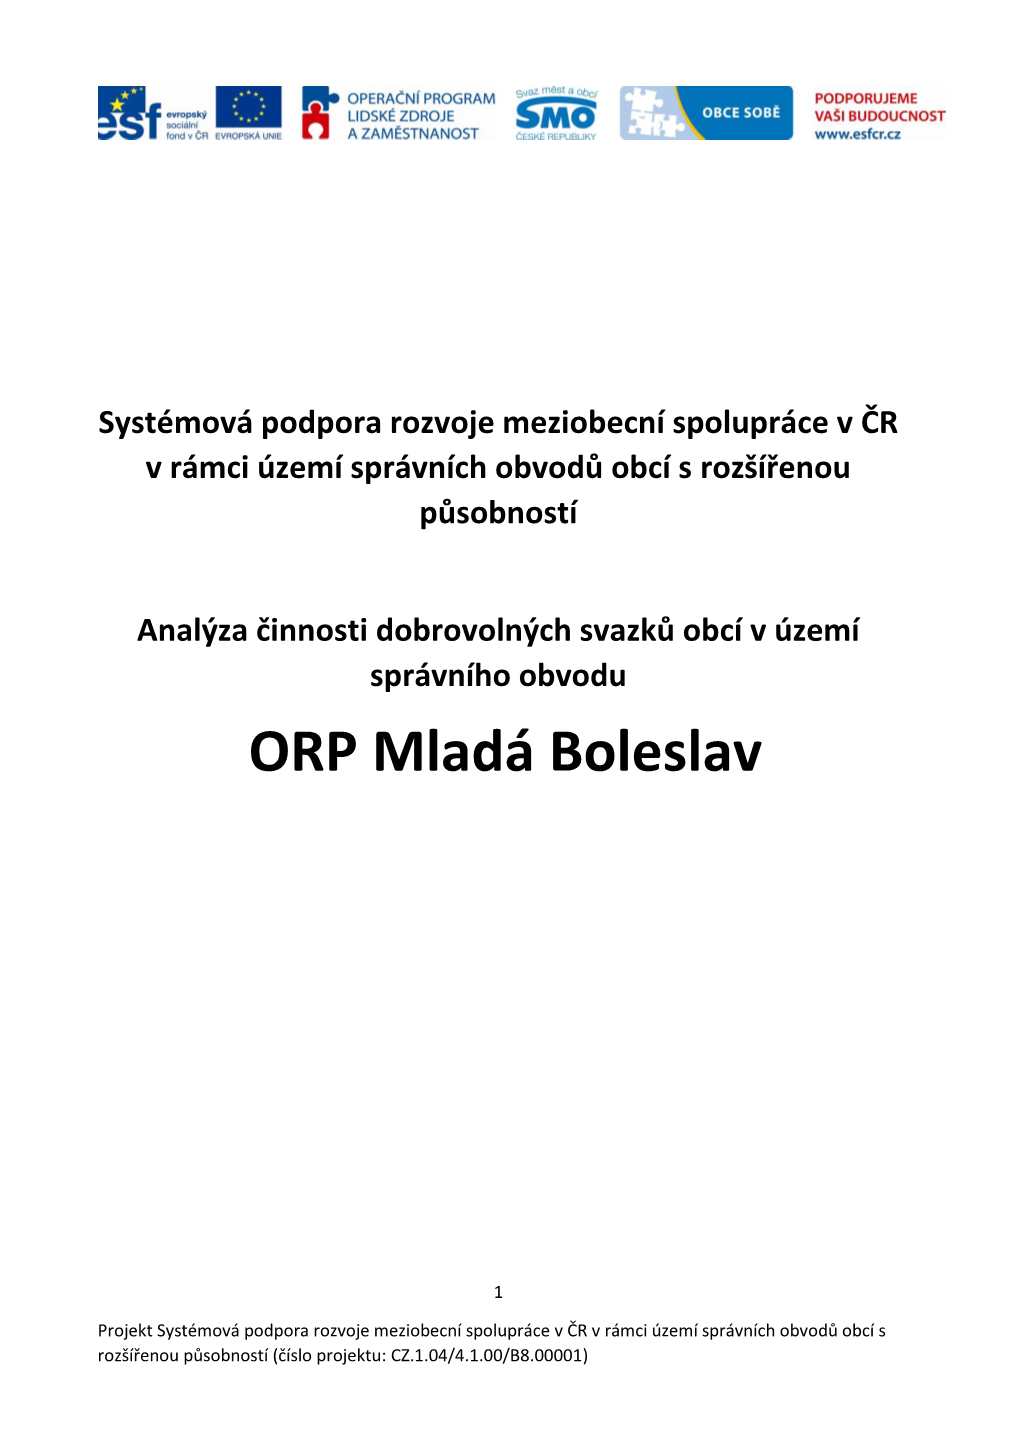 ORP Mladá Boleslav